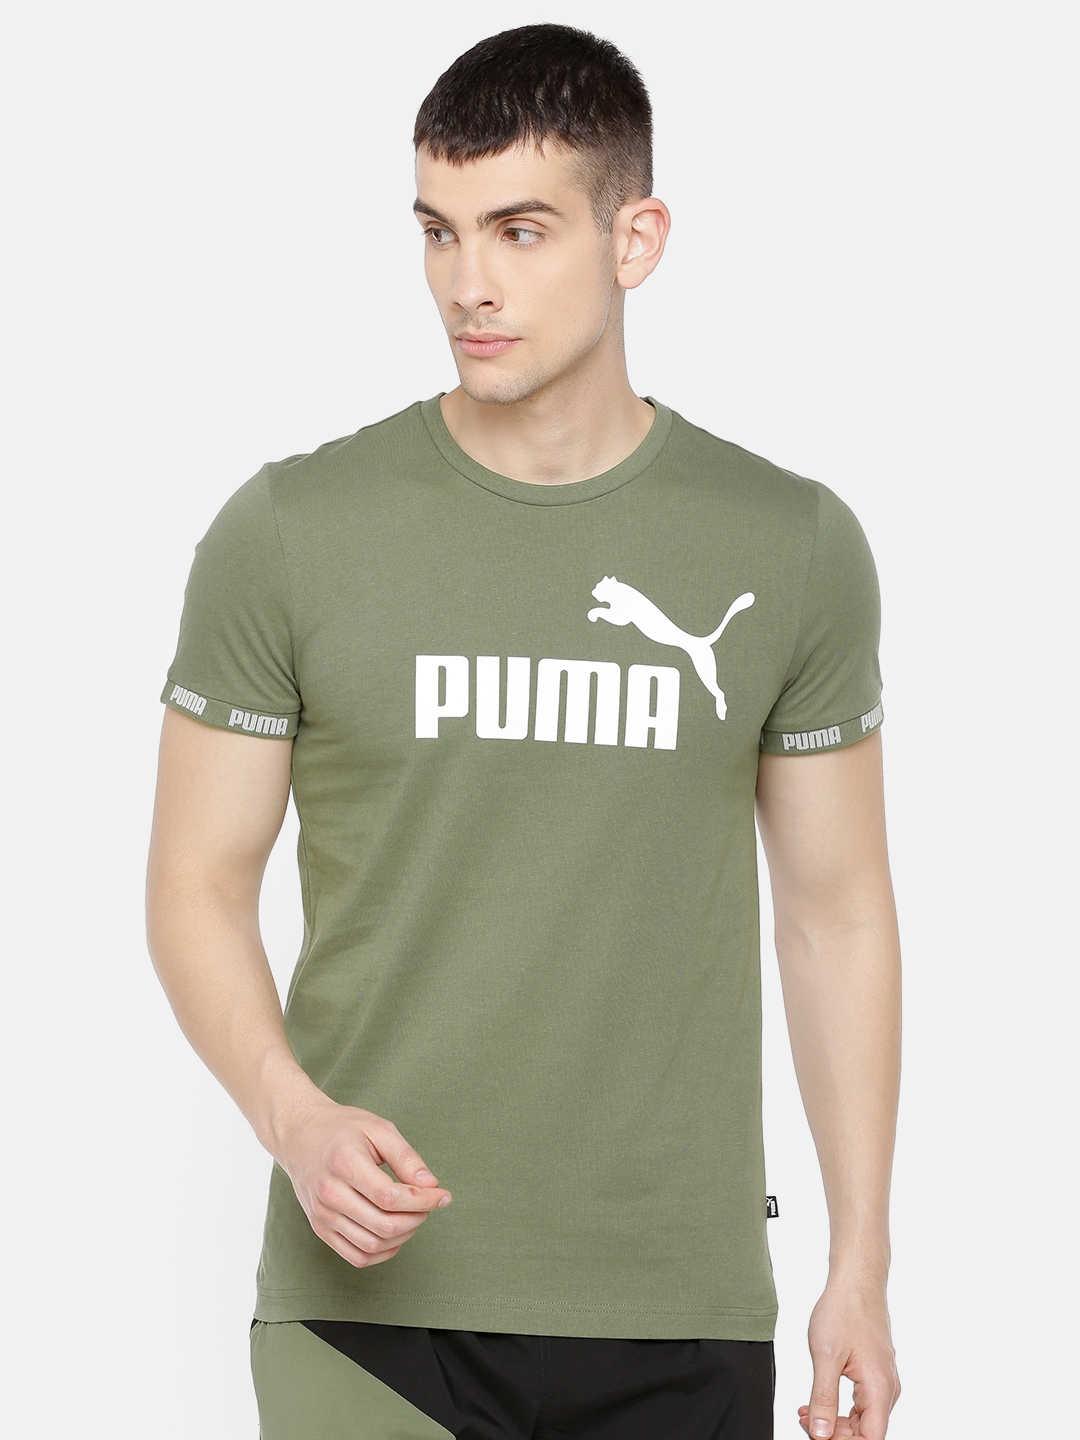 Buy Puma Men Olive Green Slim Fit Printed Amplified Big Logo Pure ...